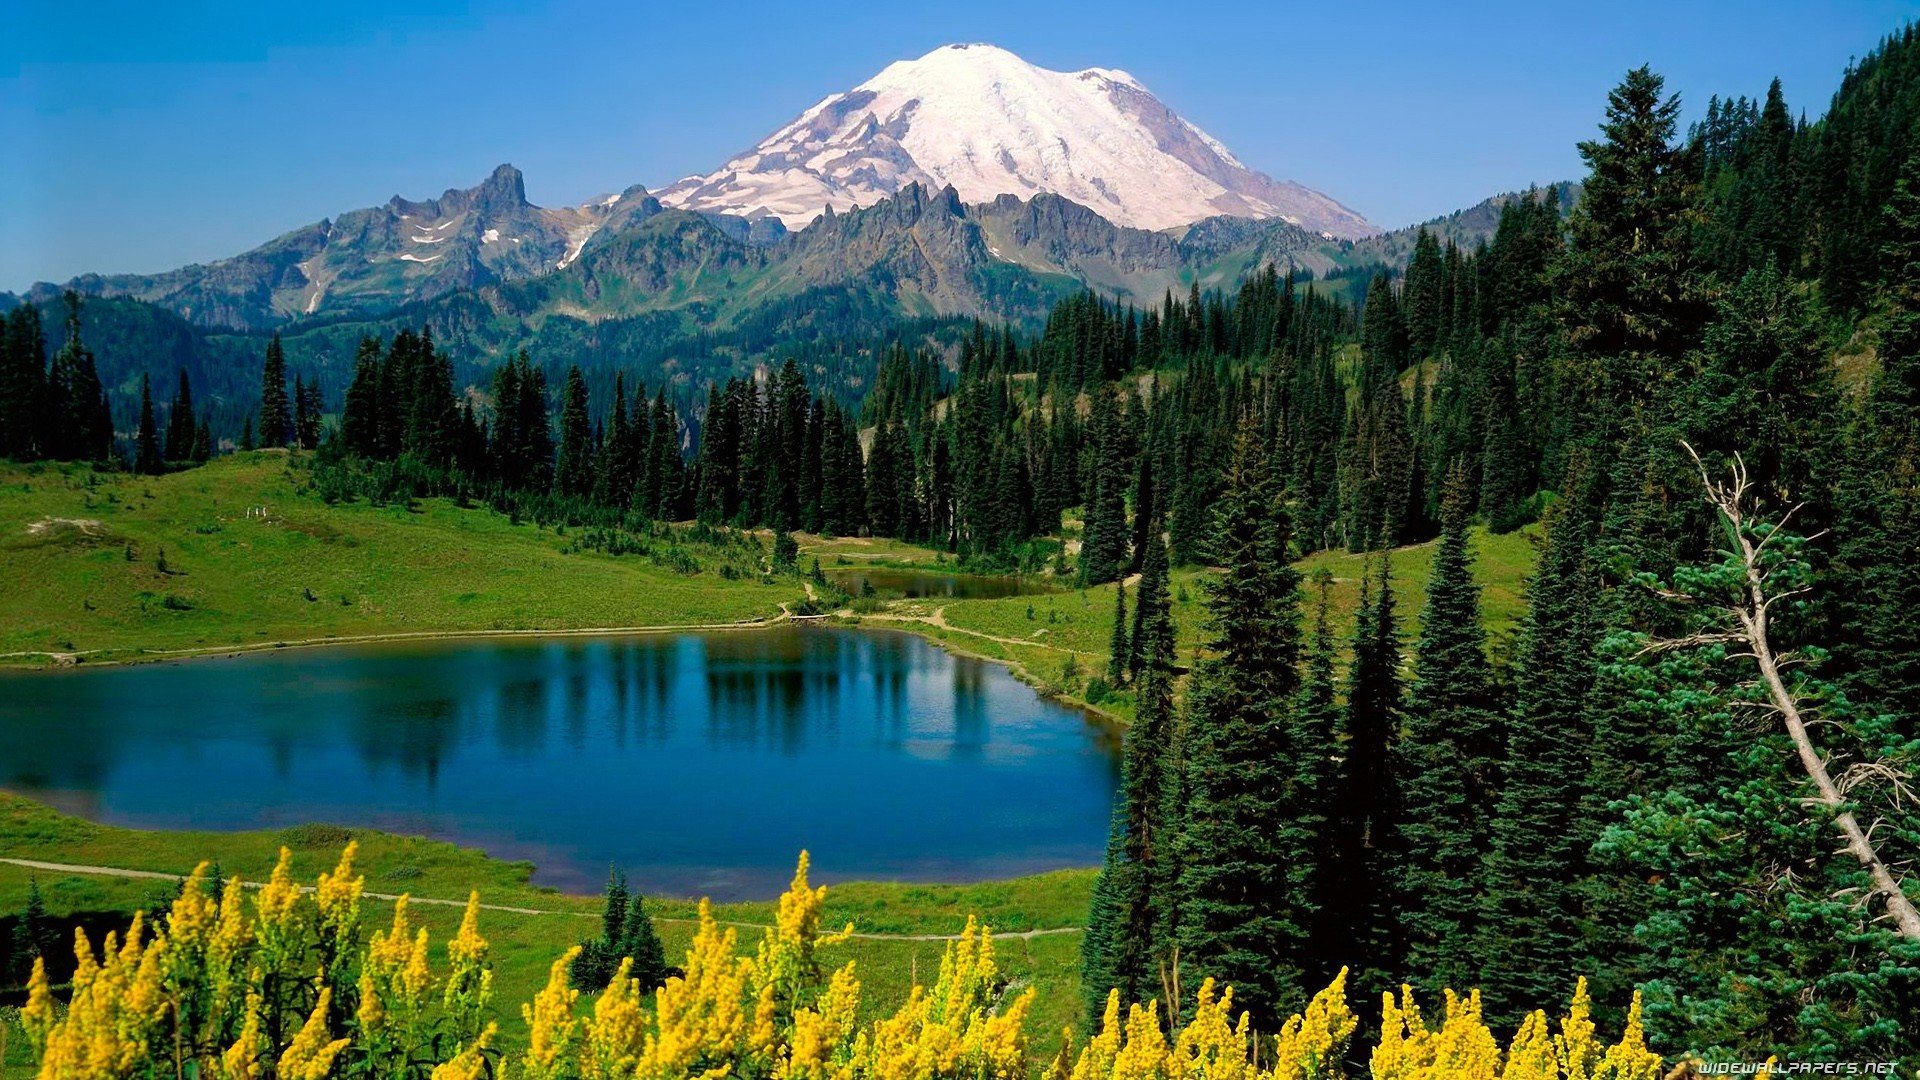  National Park Mount Rainier Washington State wallpaper background